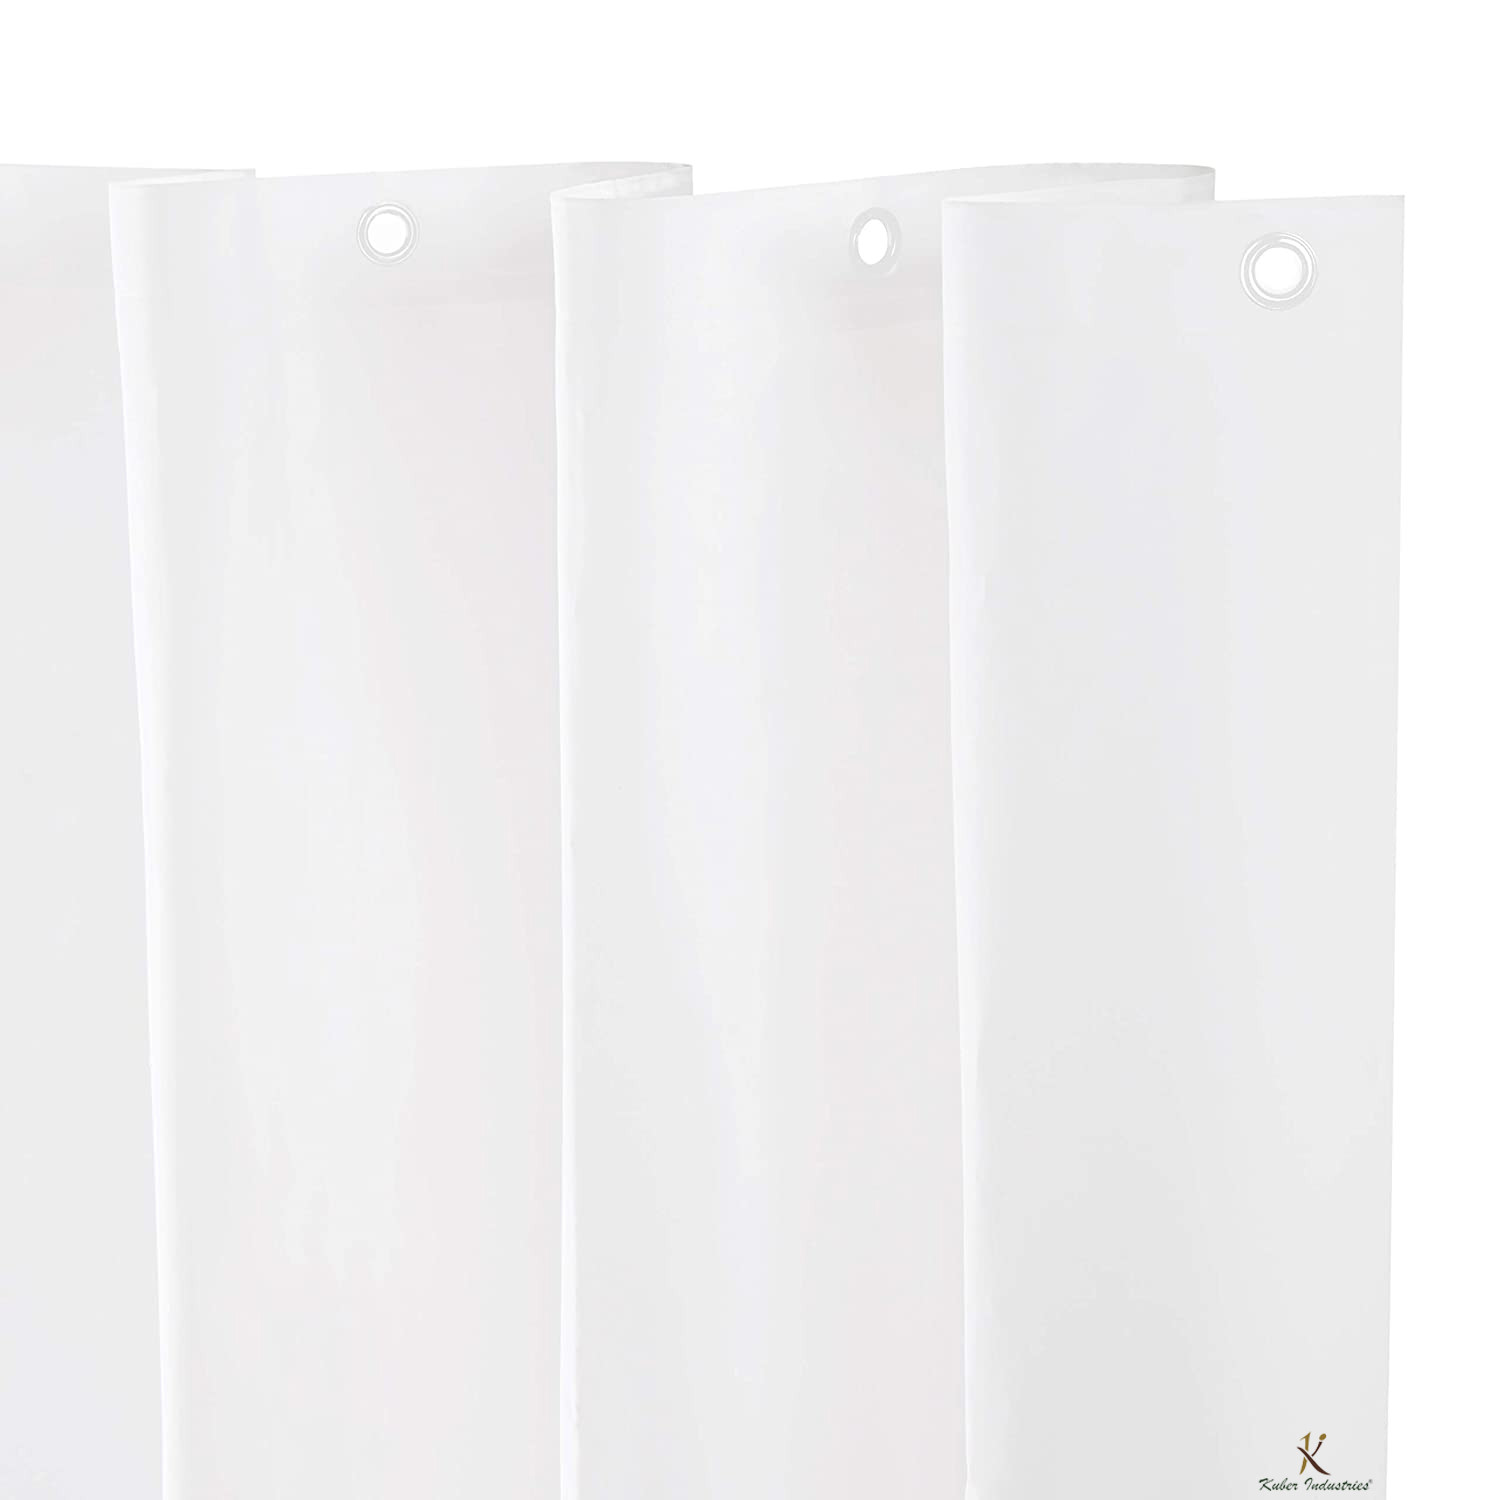 Kuber Industries PEVA Shower Curtain Liner , Heavy Duty Plastic Shower Curtain With Hooks for Bathroom, Bathtub, 70